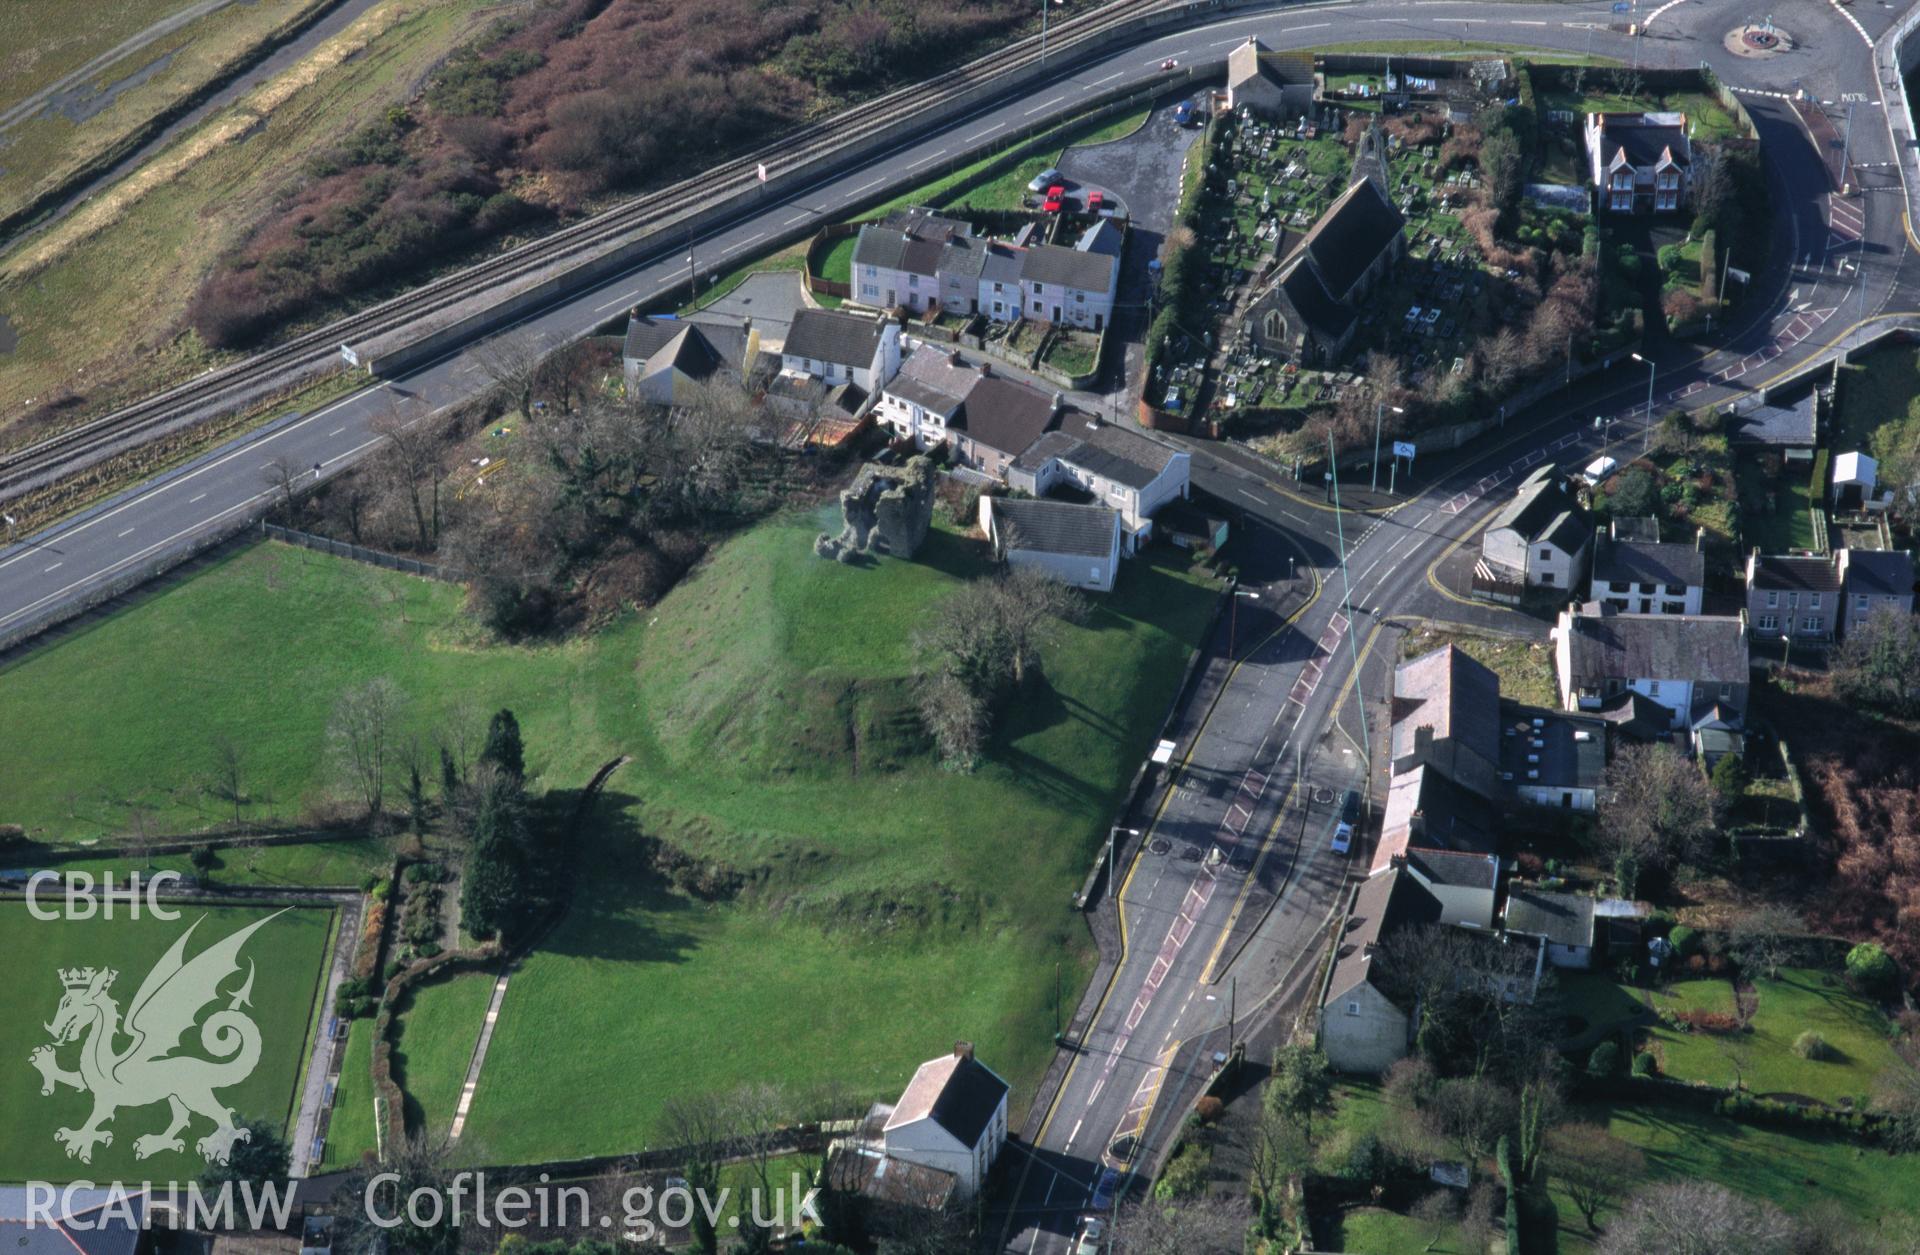 Slide of RCAHMW colour oblique aerial photograph of Loughor Castle, taken by C.R. Musson, 15/2/1997.